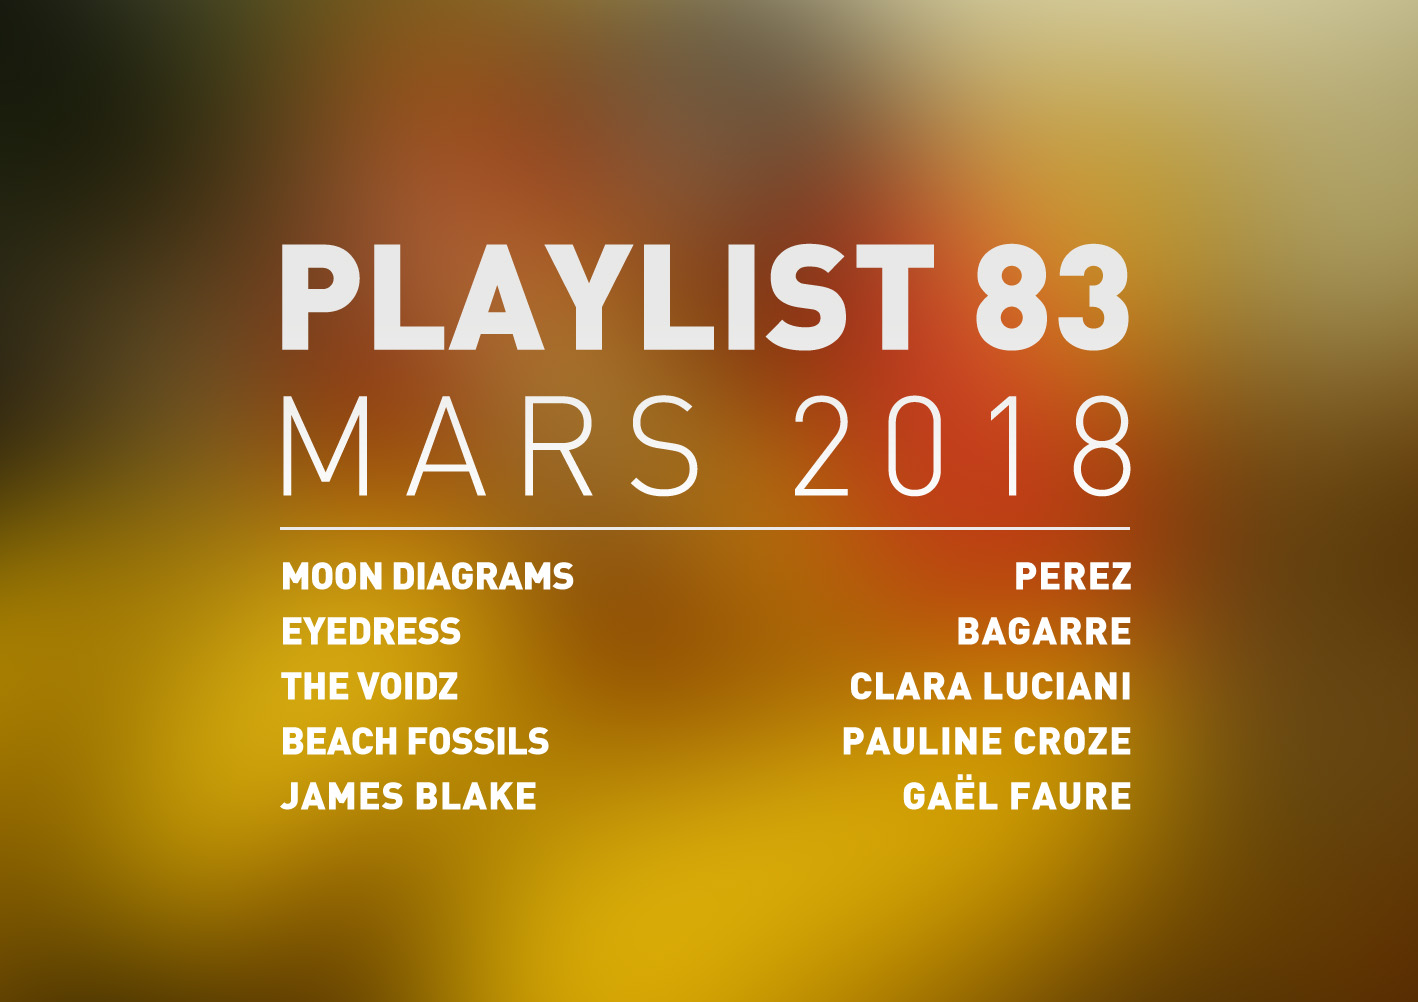 Playlist #83 : Moon Diagrams, The Voidz, Clara Luciana, Gaël Faure, etc.